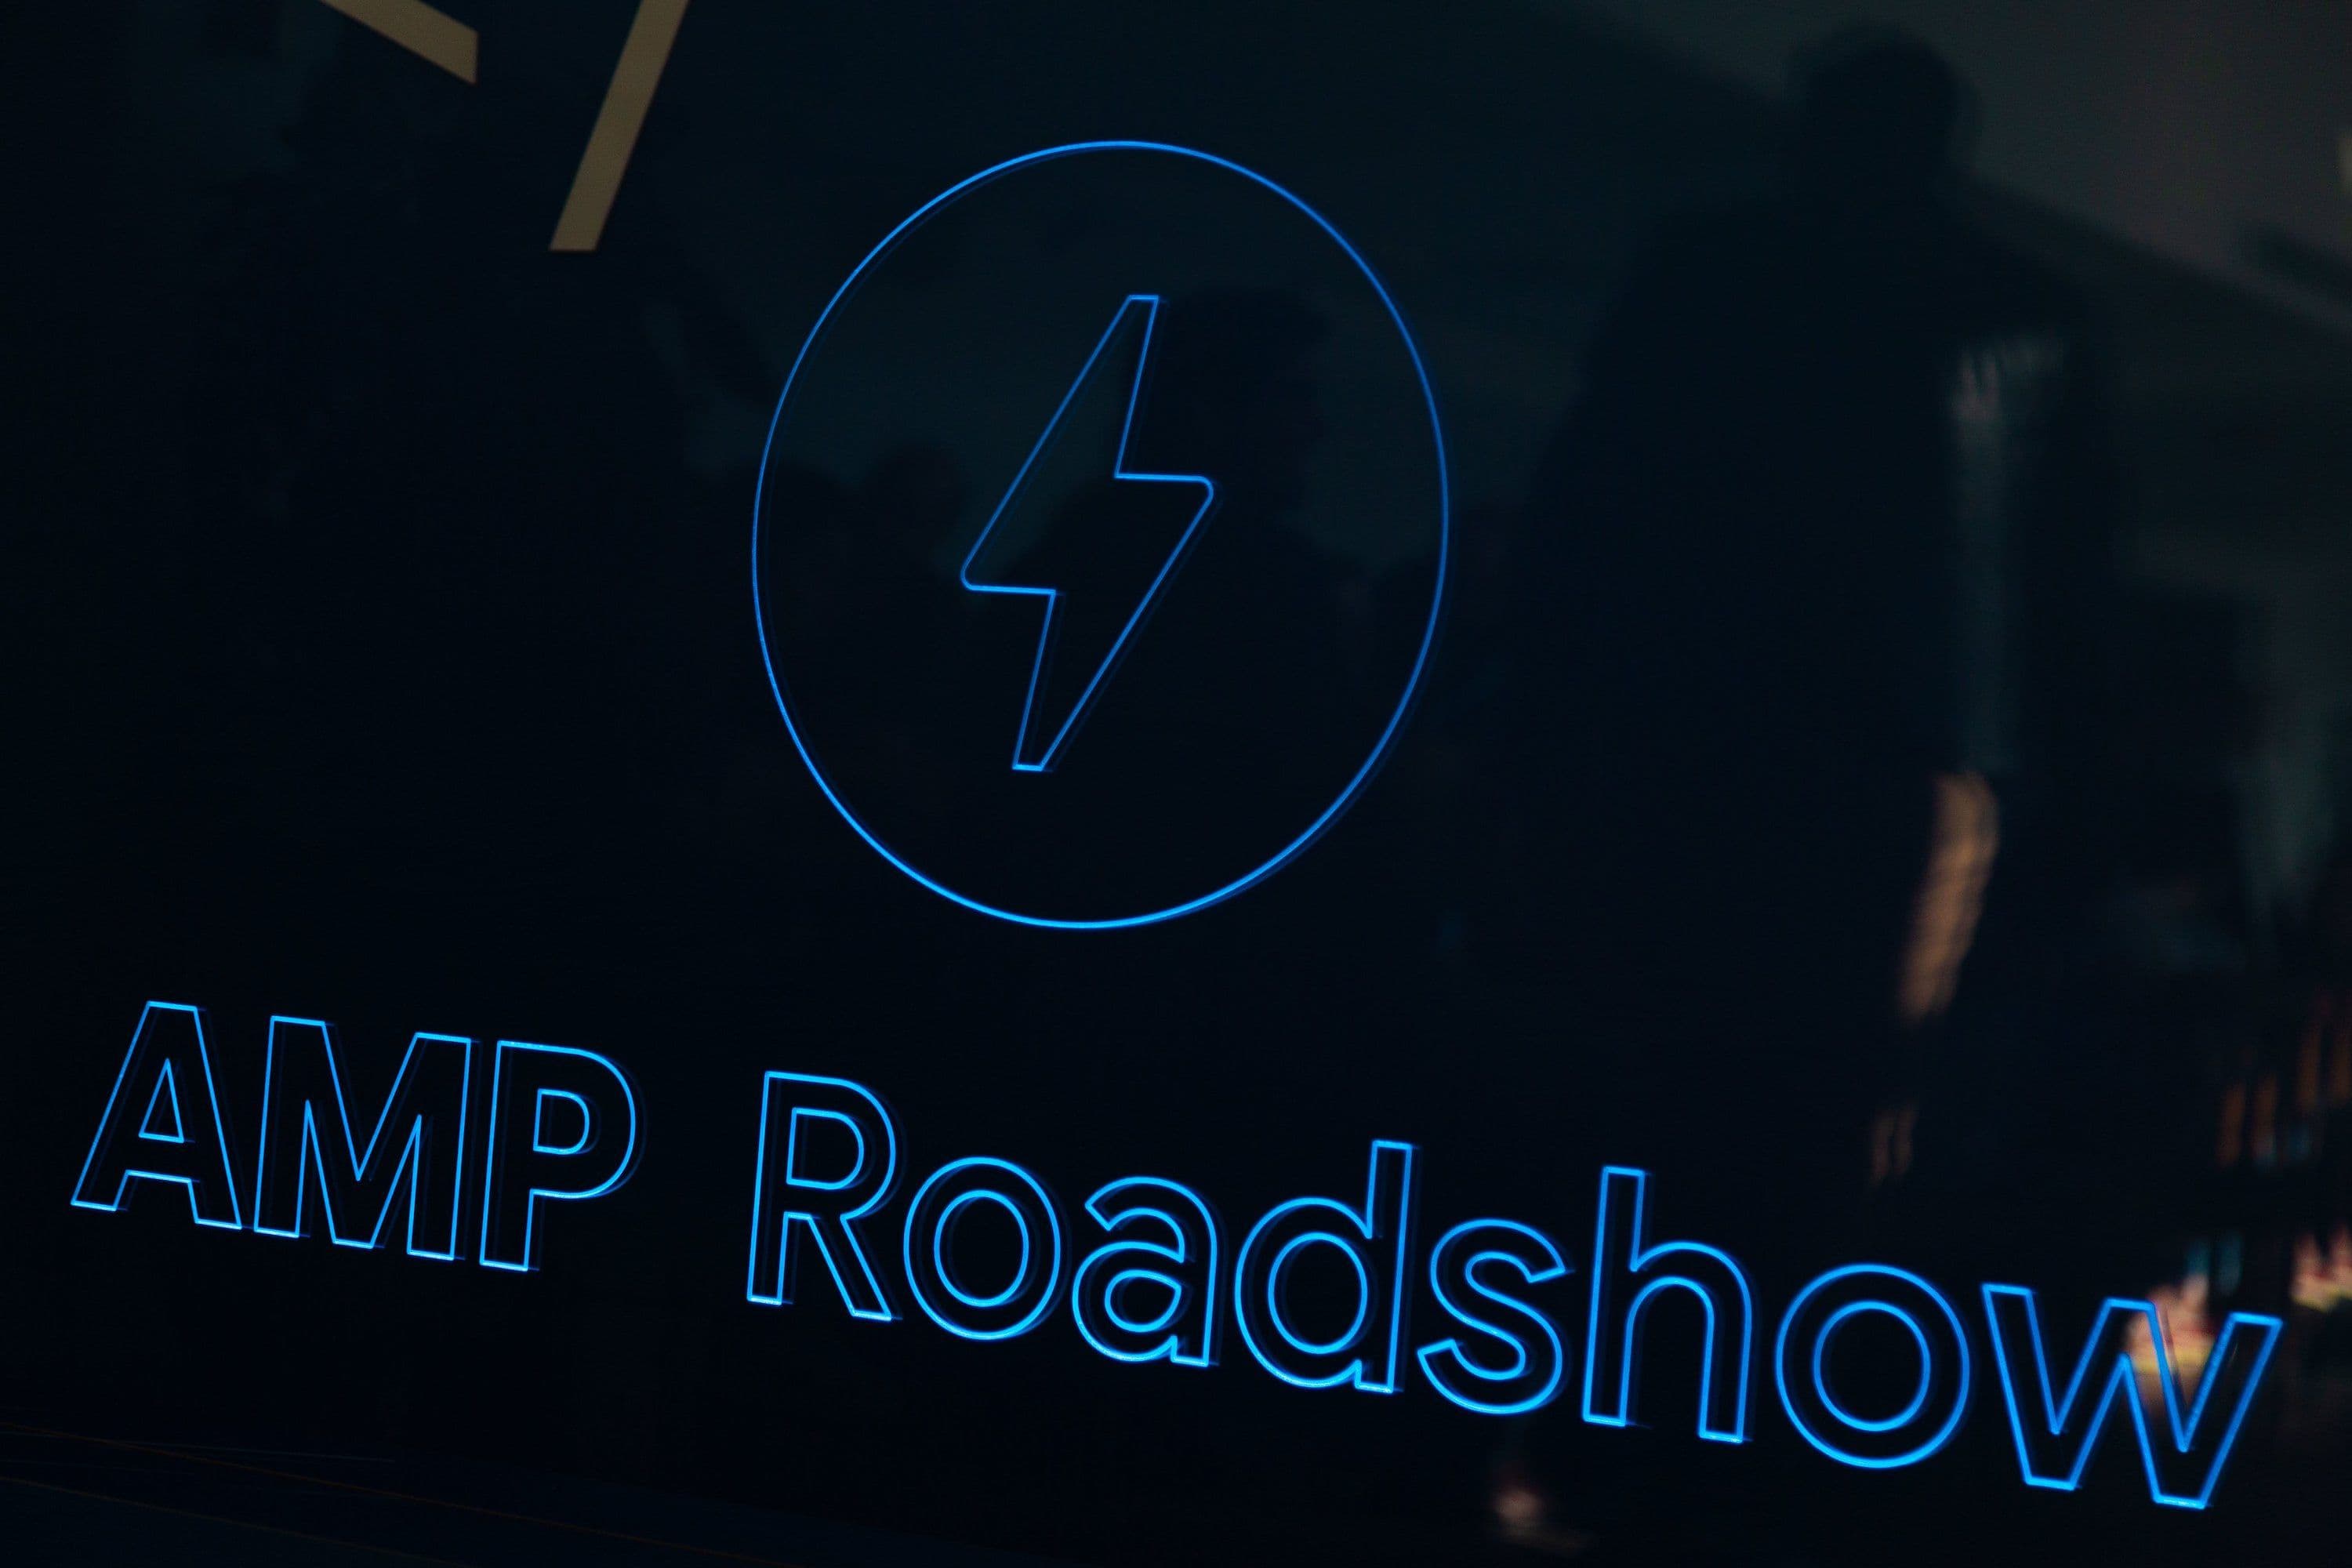 Google / Amp Roadshow - 2